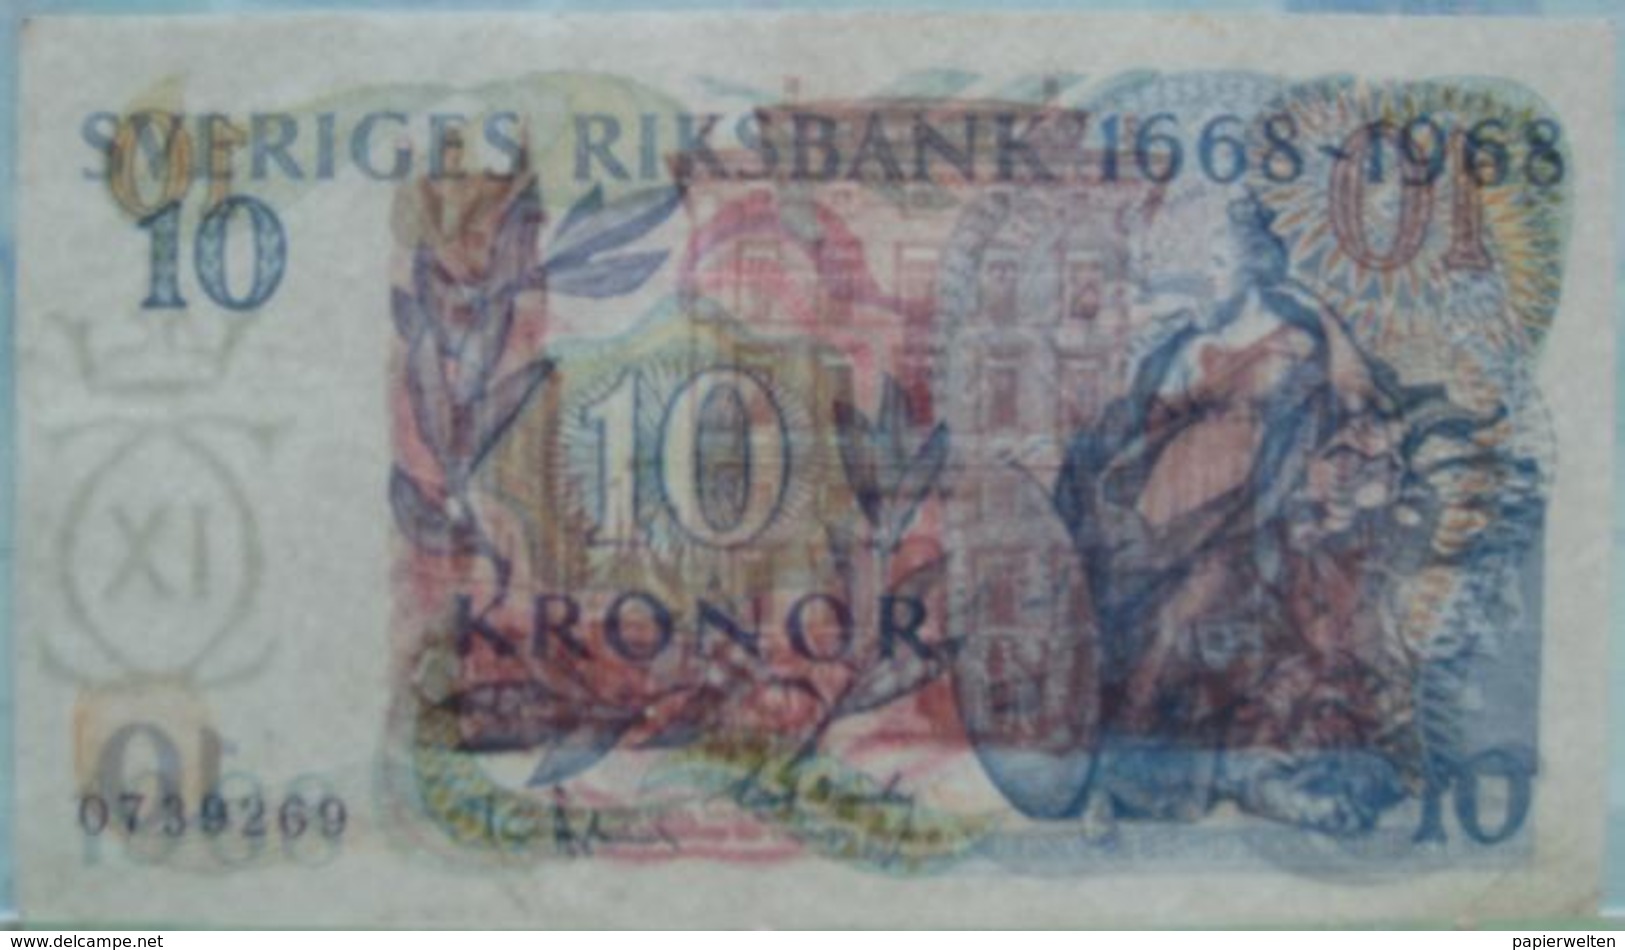 10 Kronen / Kronor  1968 (WPM 56a) - Sweden